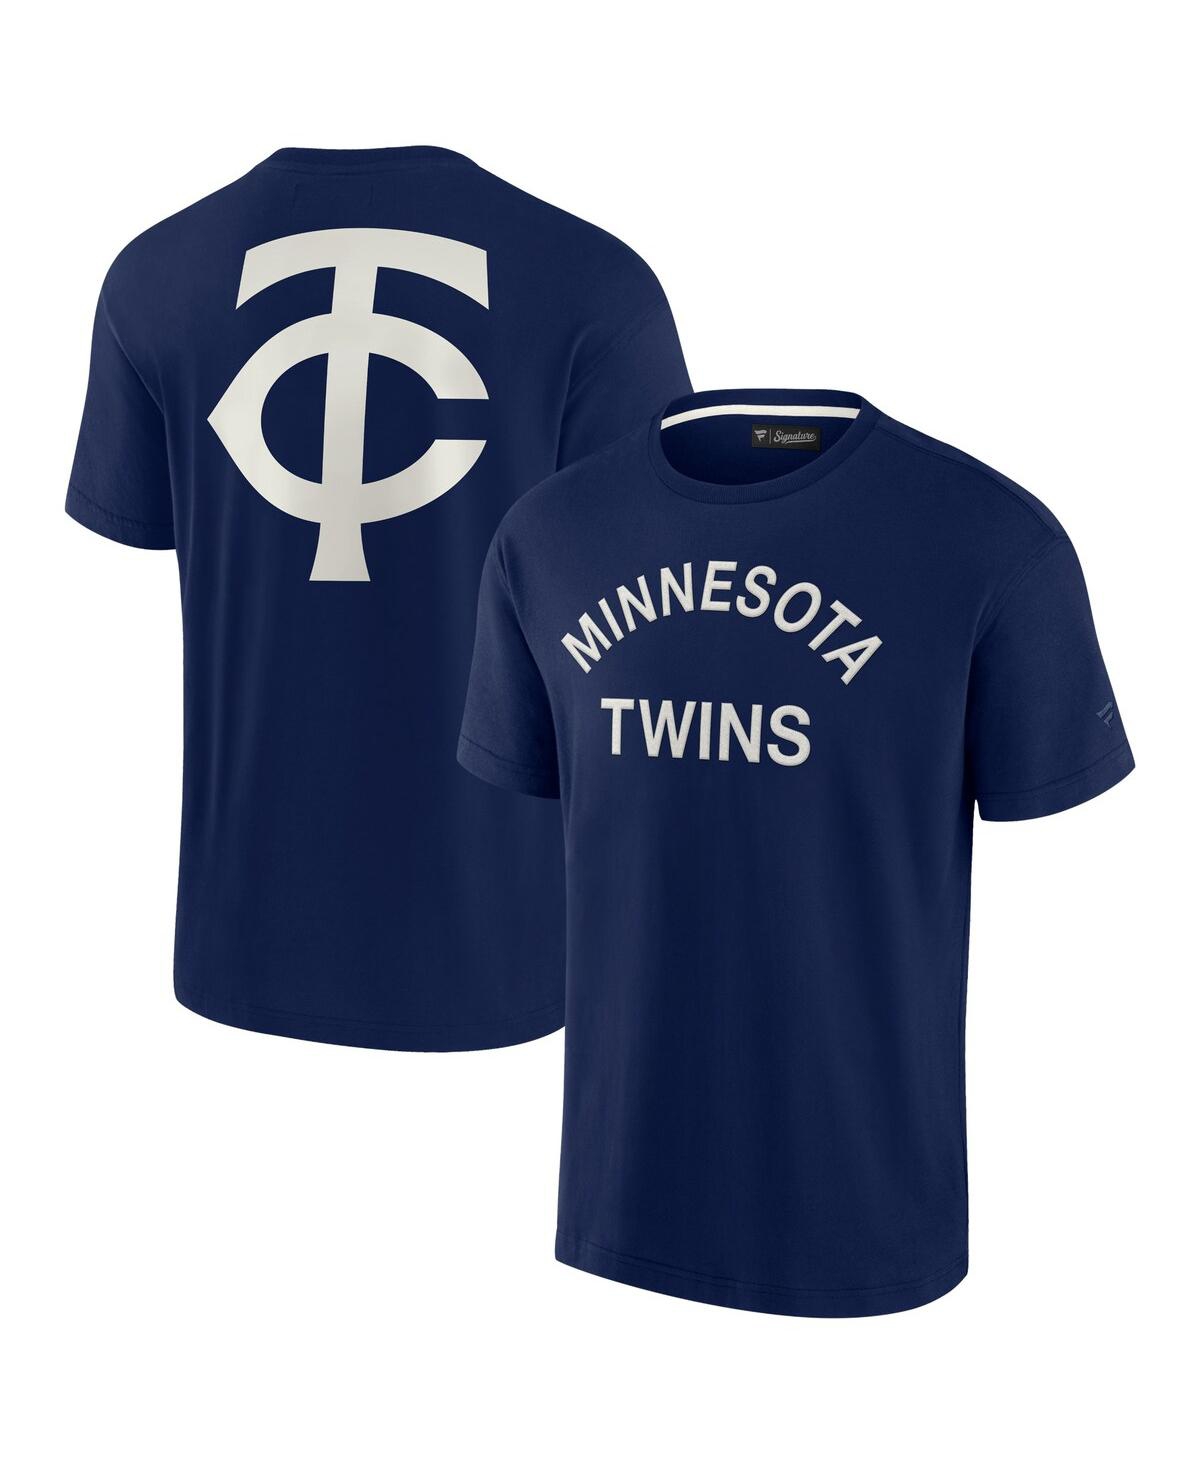 Shop Fanatics Signature Men's And Women's  Navy Minnesota Twins Super Soft Short Sleeve T-shirt